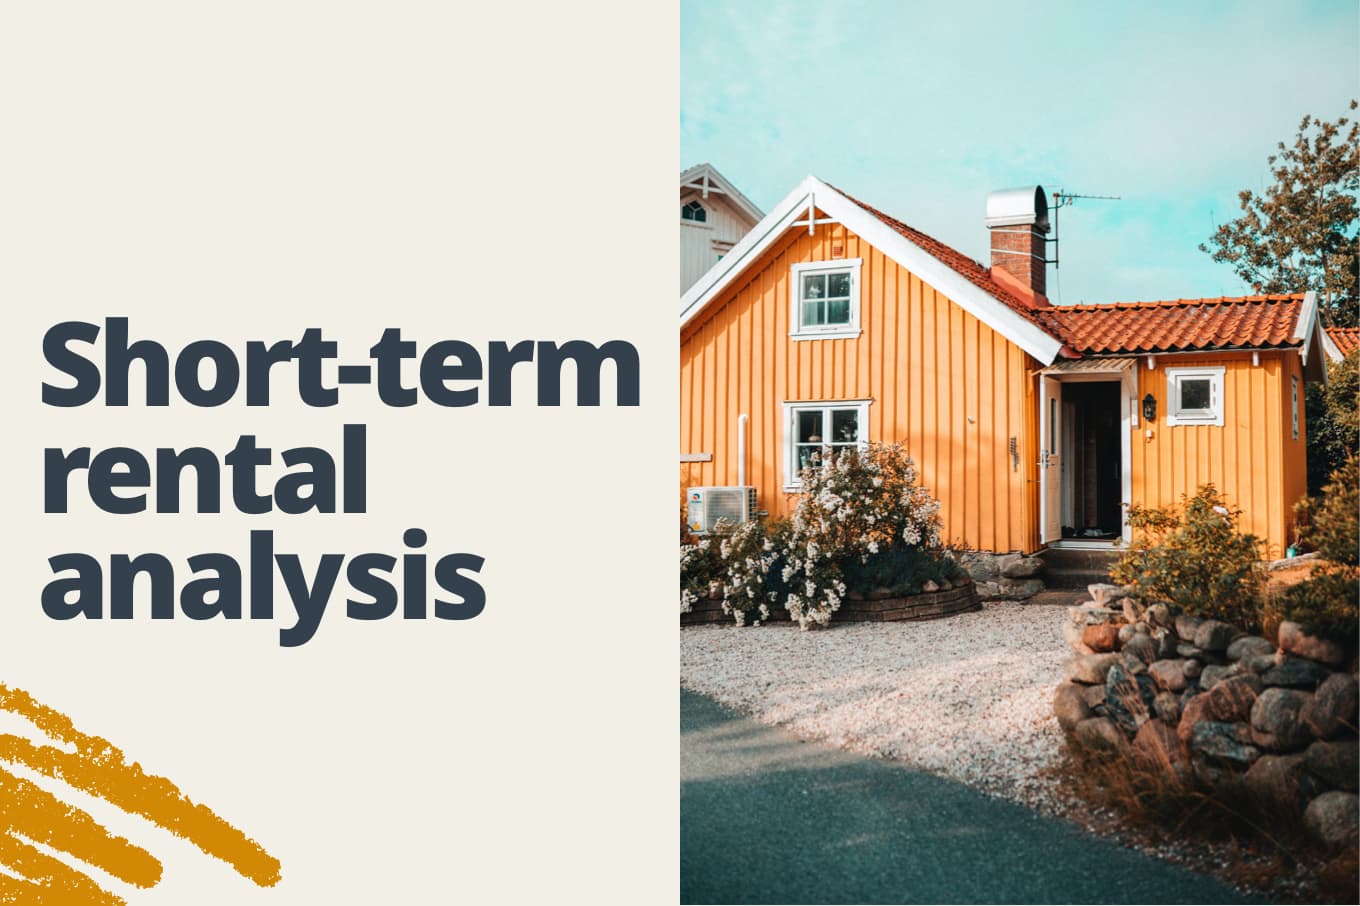 How to Analyze a Short-Term Rental